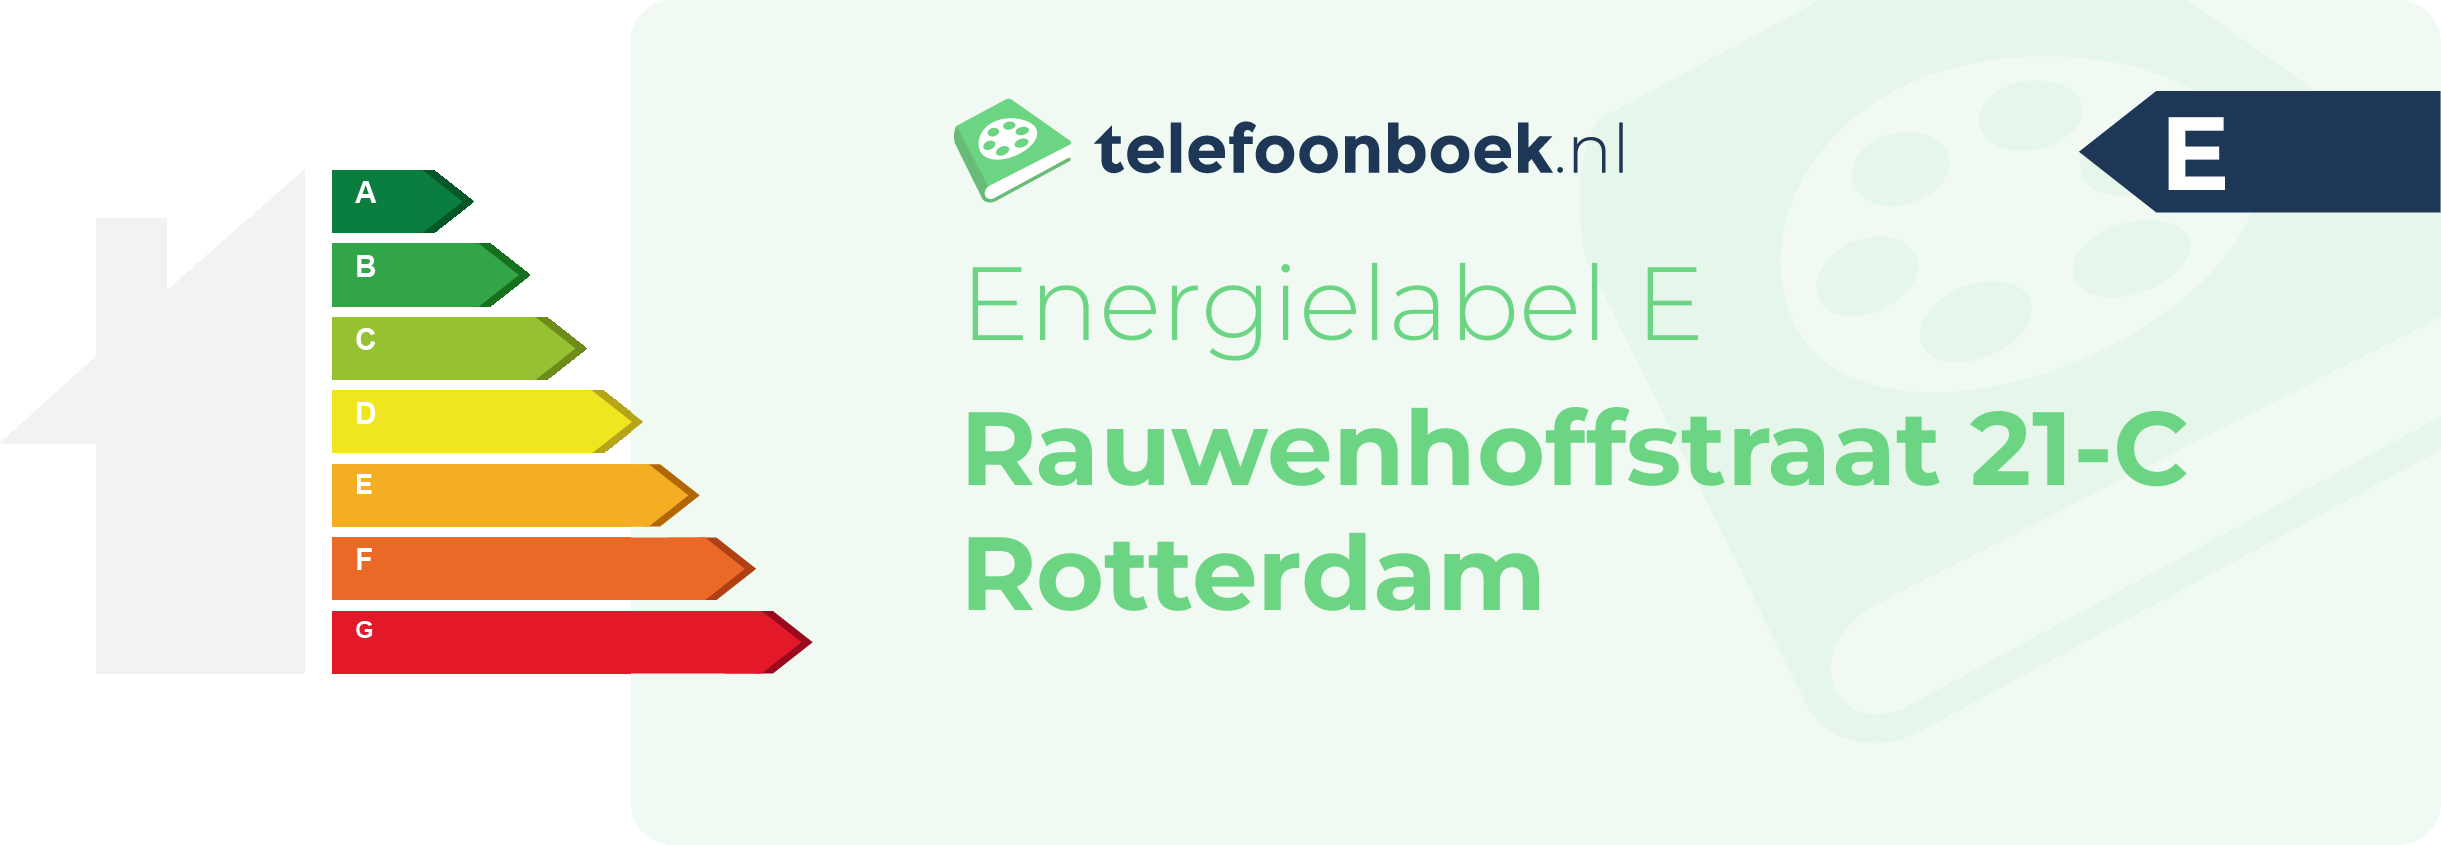 Energielabel Rauwenhoffstraat 21-C Rotterdam